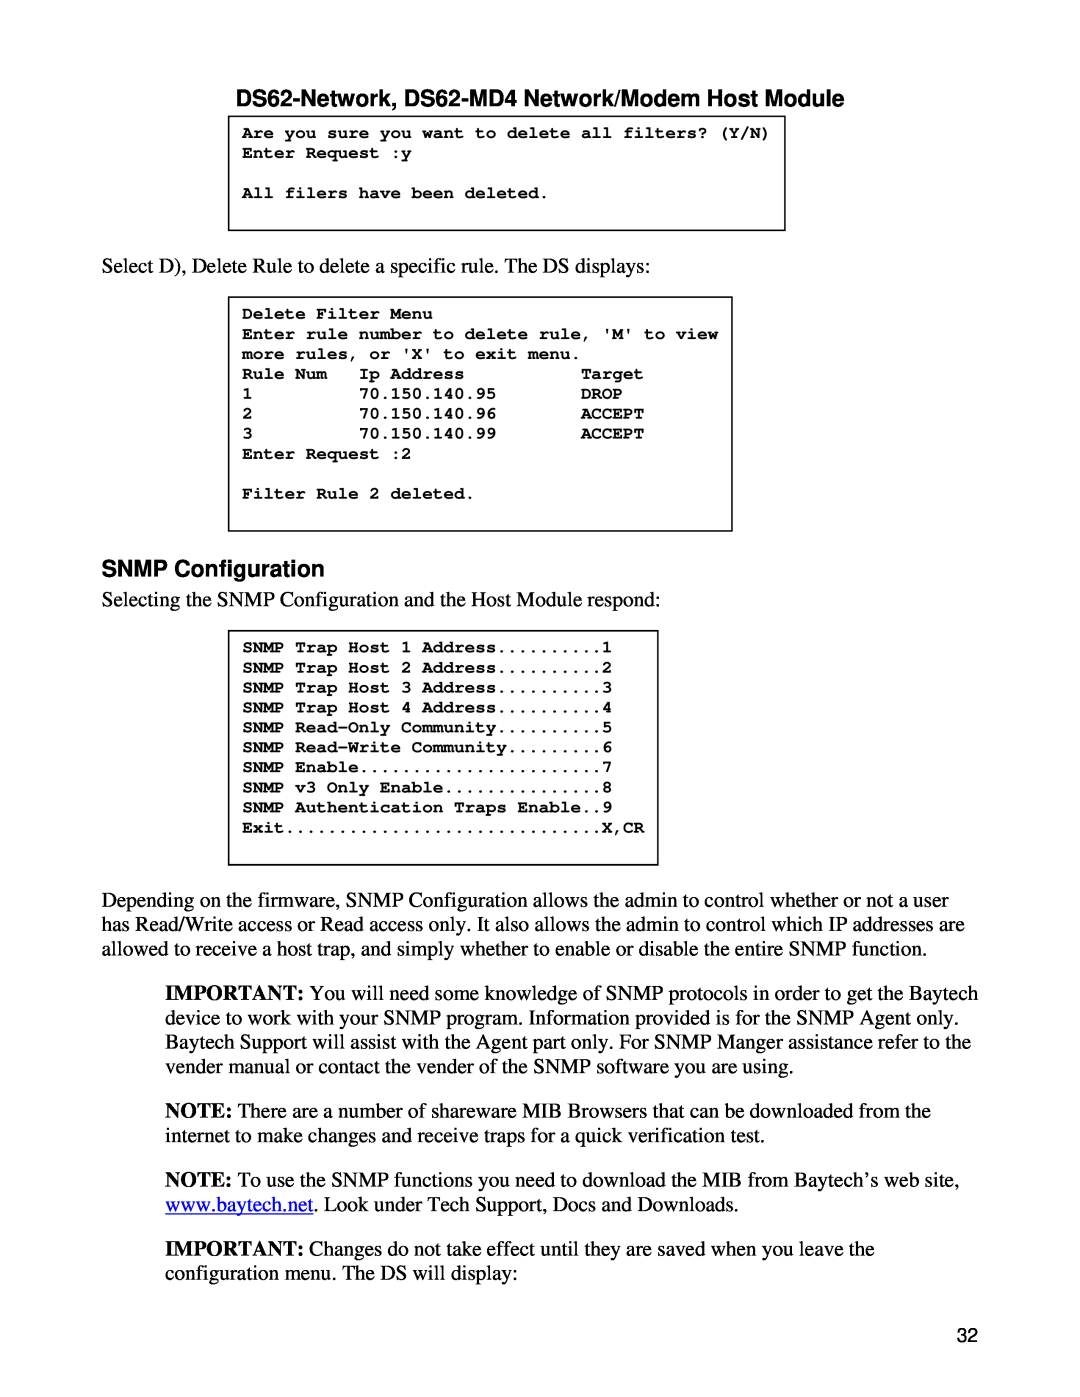 Bay Technical Associates DS Series manual SNMP Configuration, DS62-Network, DS62-MD4 Network/Modem Host Module 